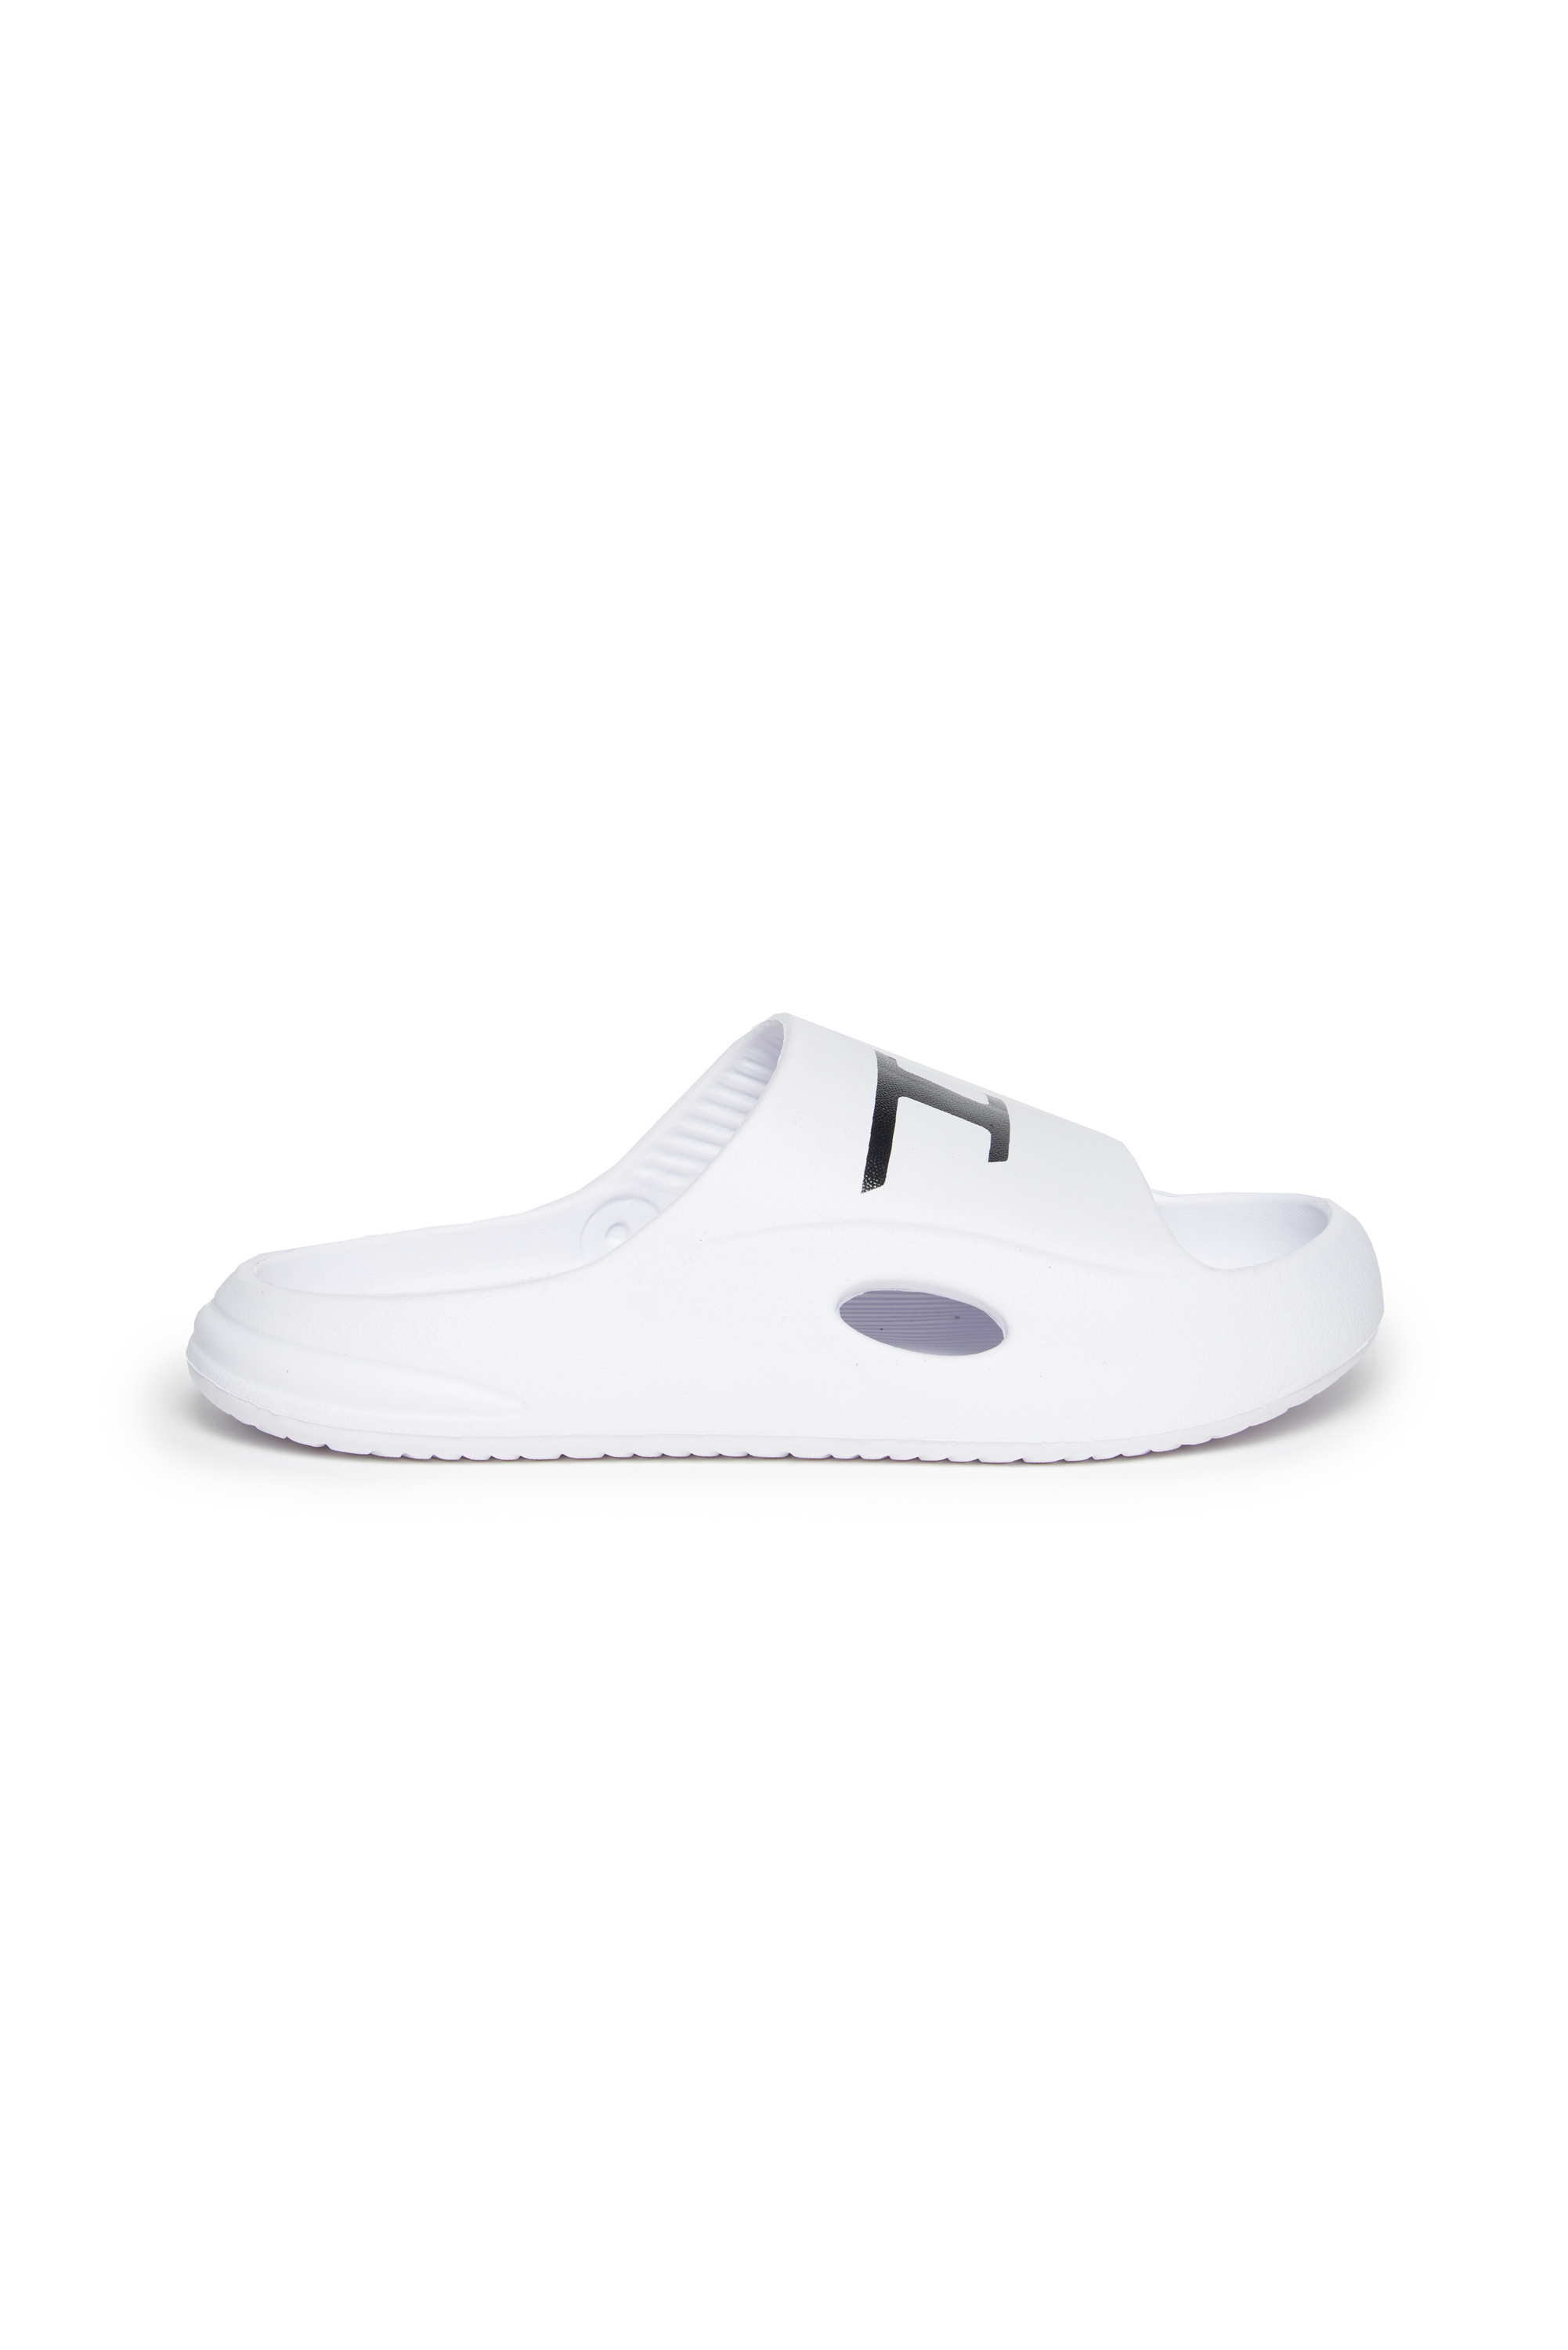 Diesel - Slide sandals with D logo print - Footwear - Unisex - White